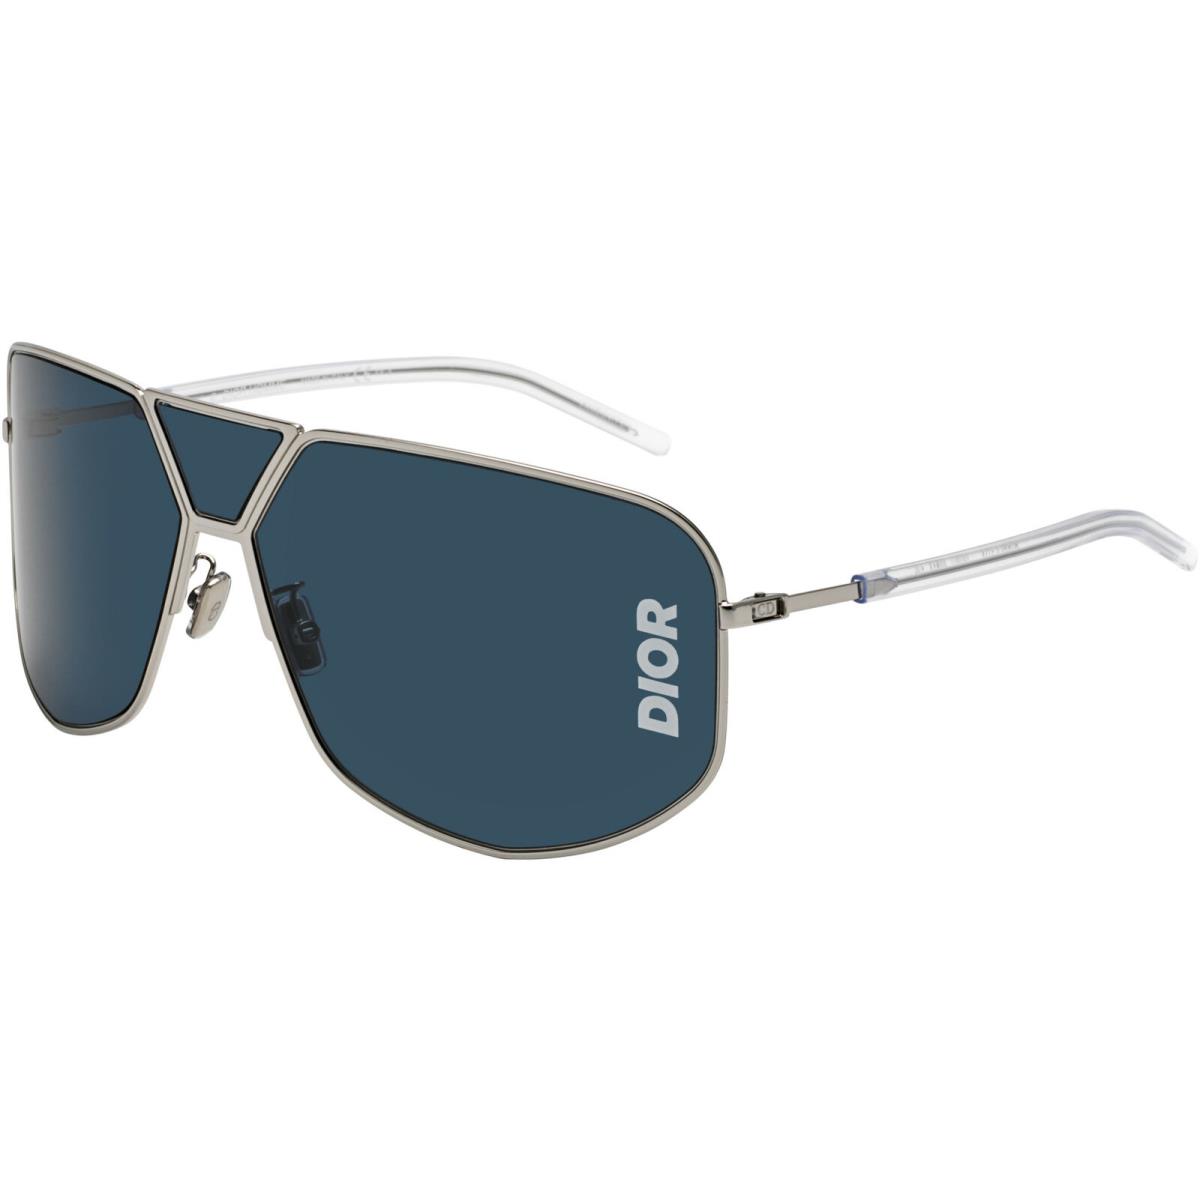 Dior Sunglasses Diorultra 010-KU 68mm Palladium / Blue Lens